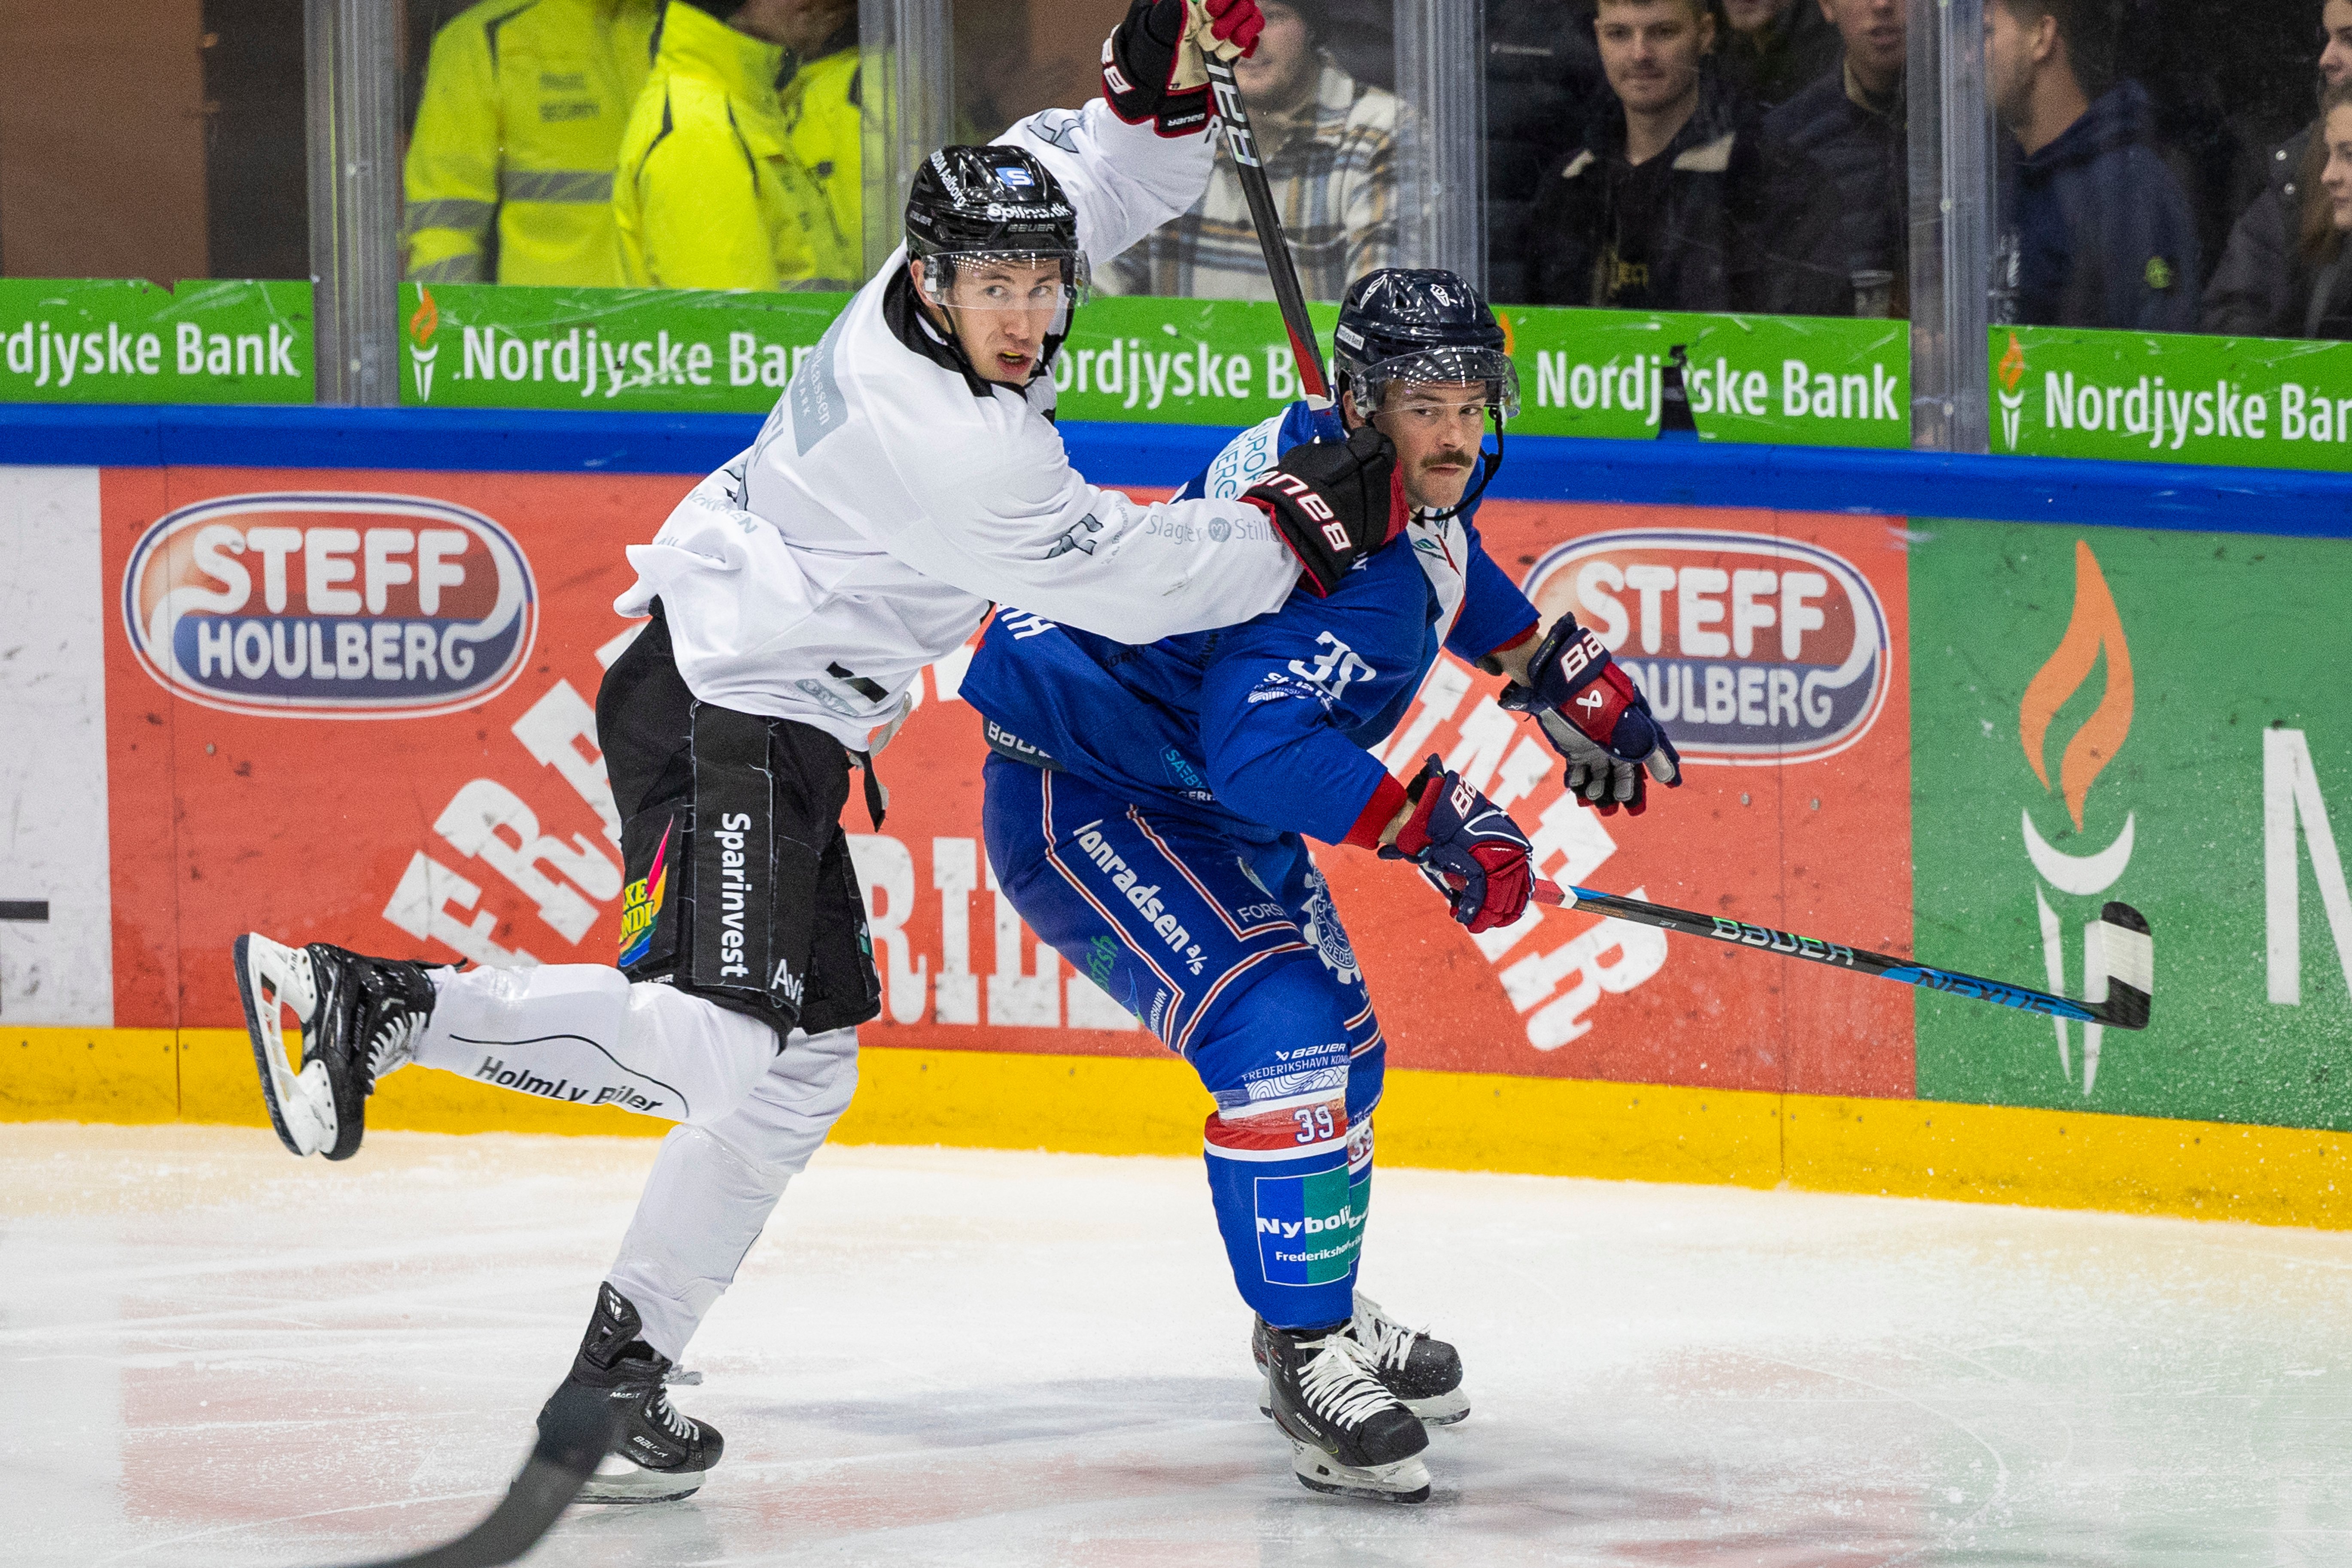 Aalborg slog hårdt tilbage i dramatisk ishockeybrag mod Frederikshavn